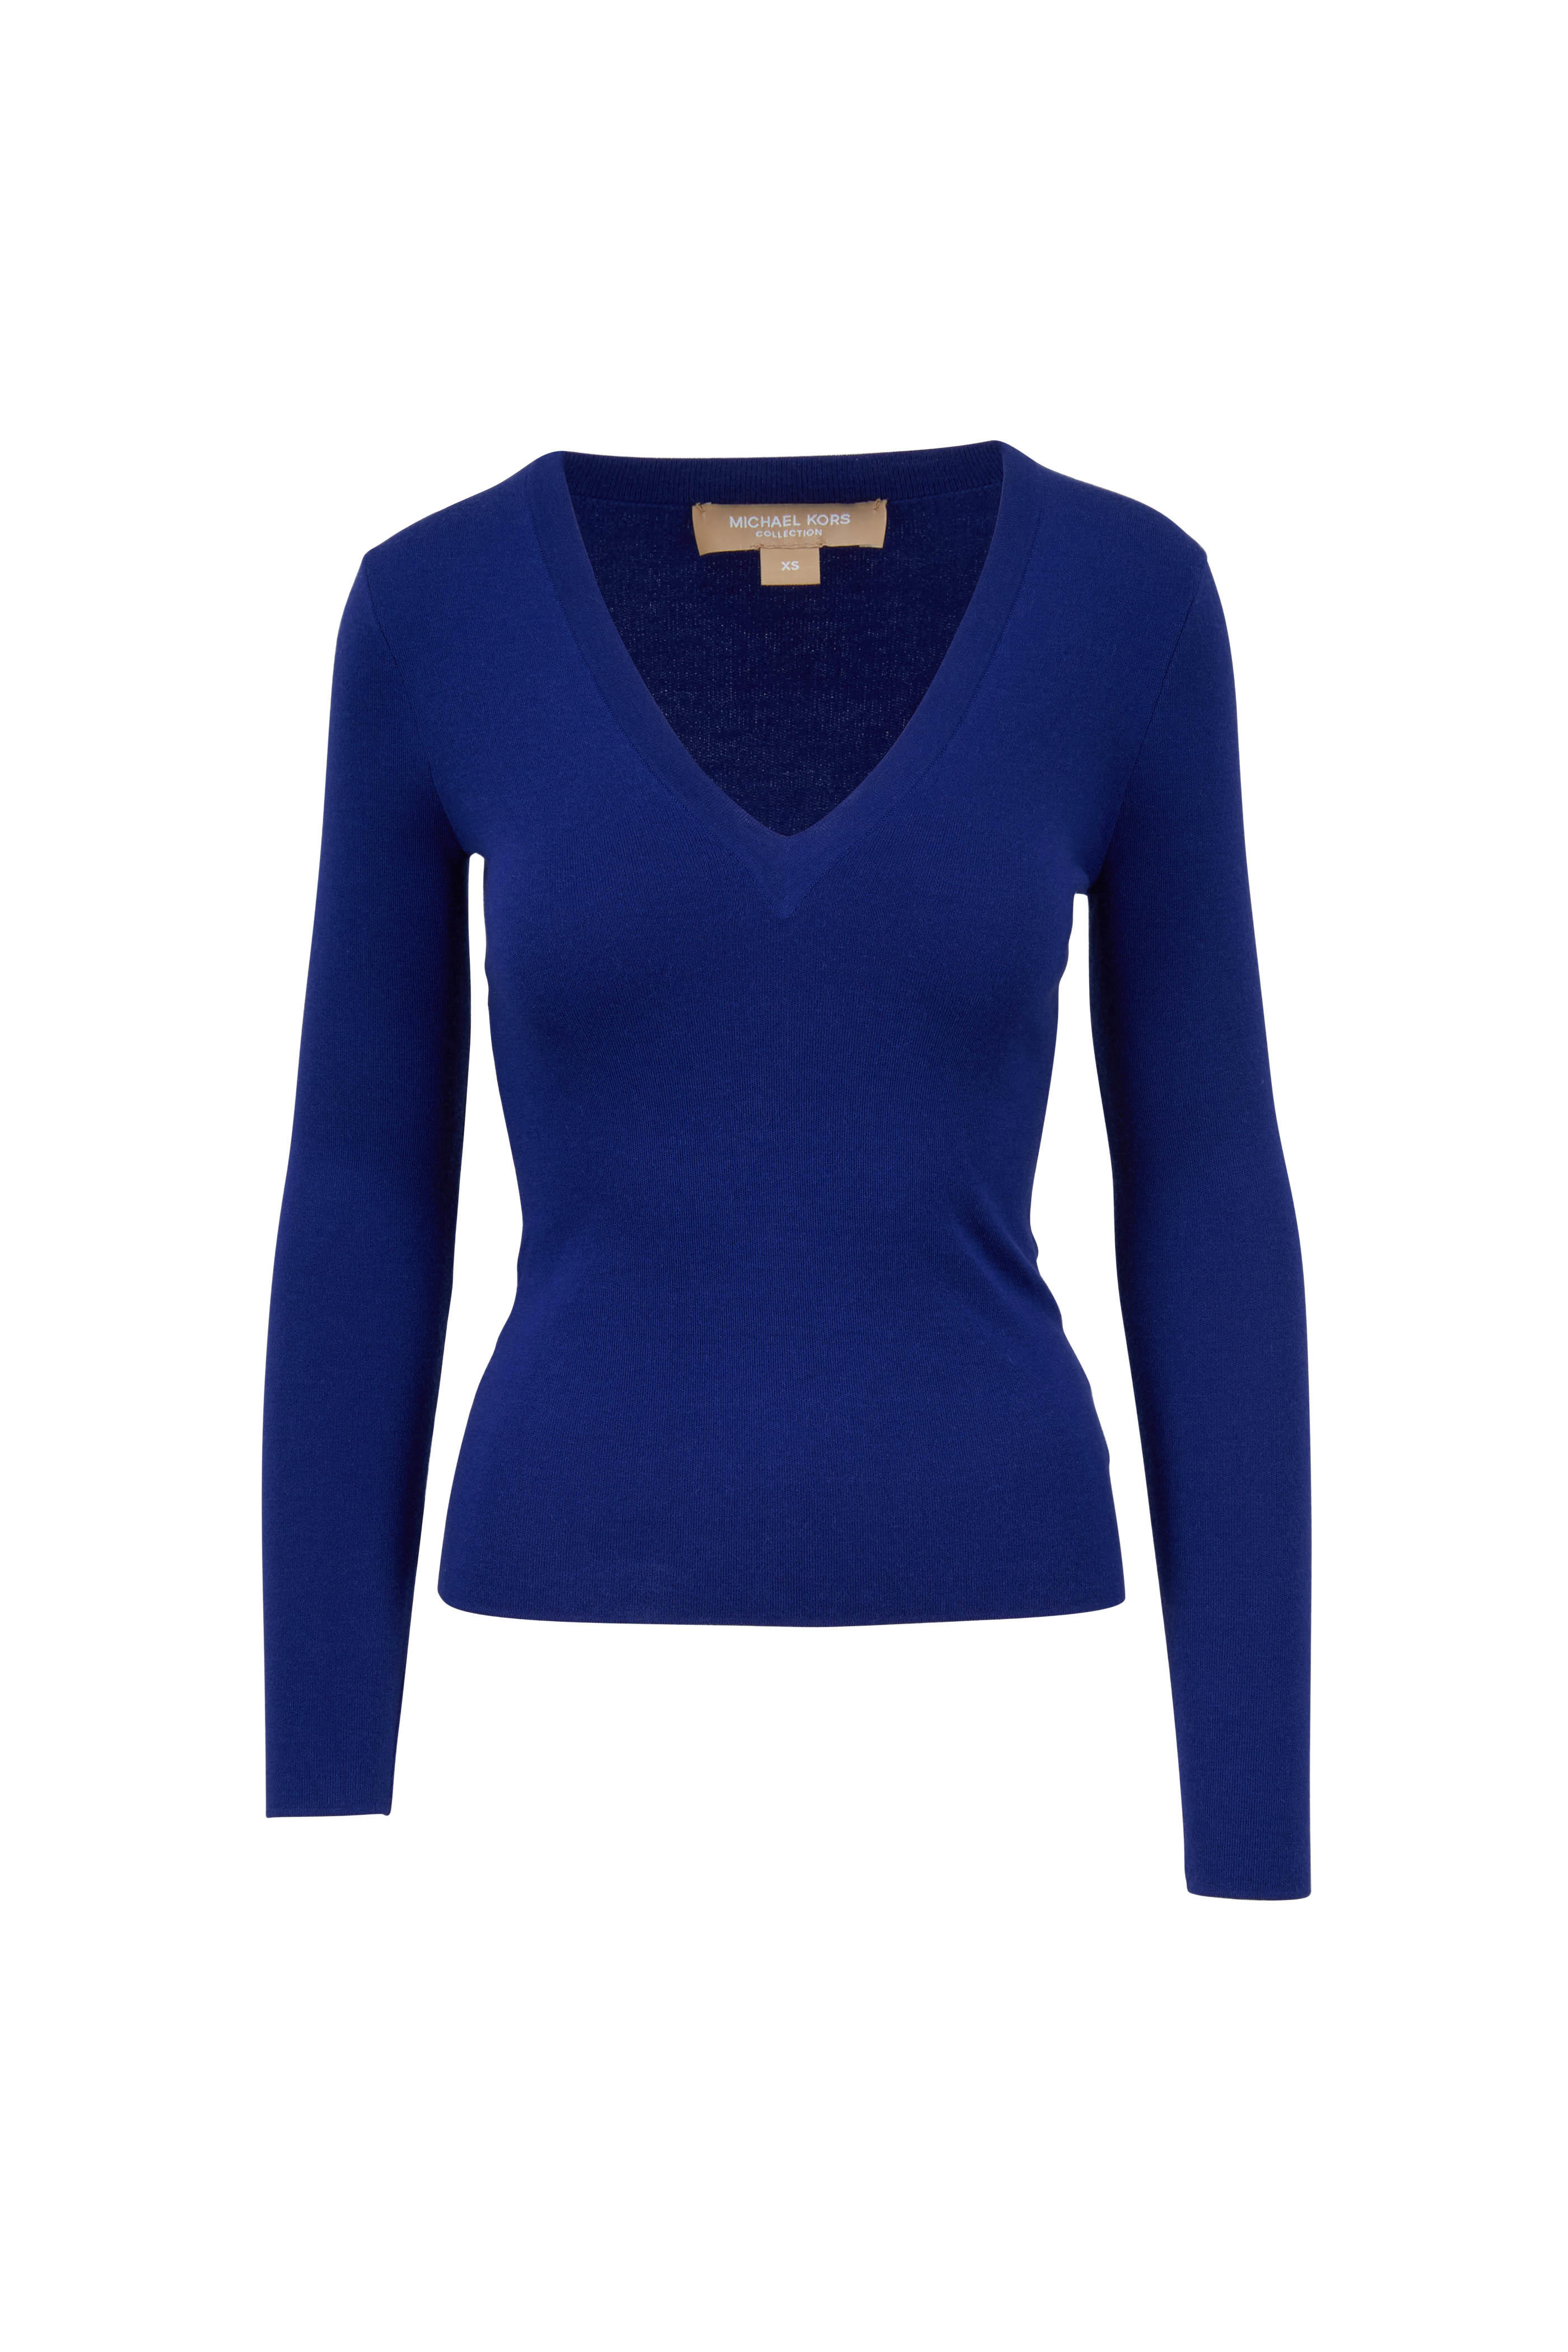 michael kors blue sweater